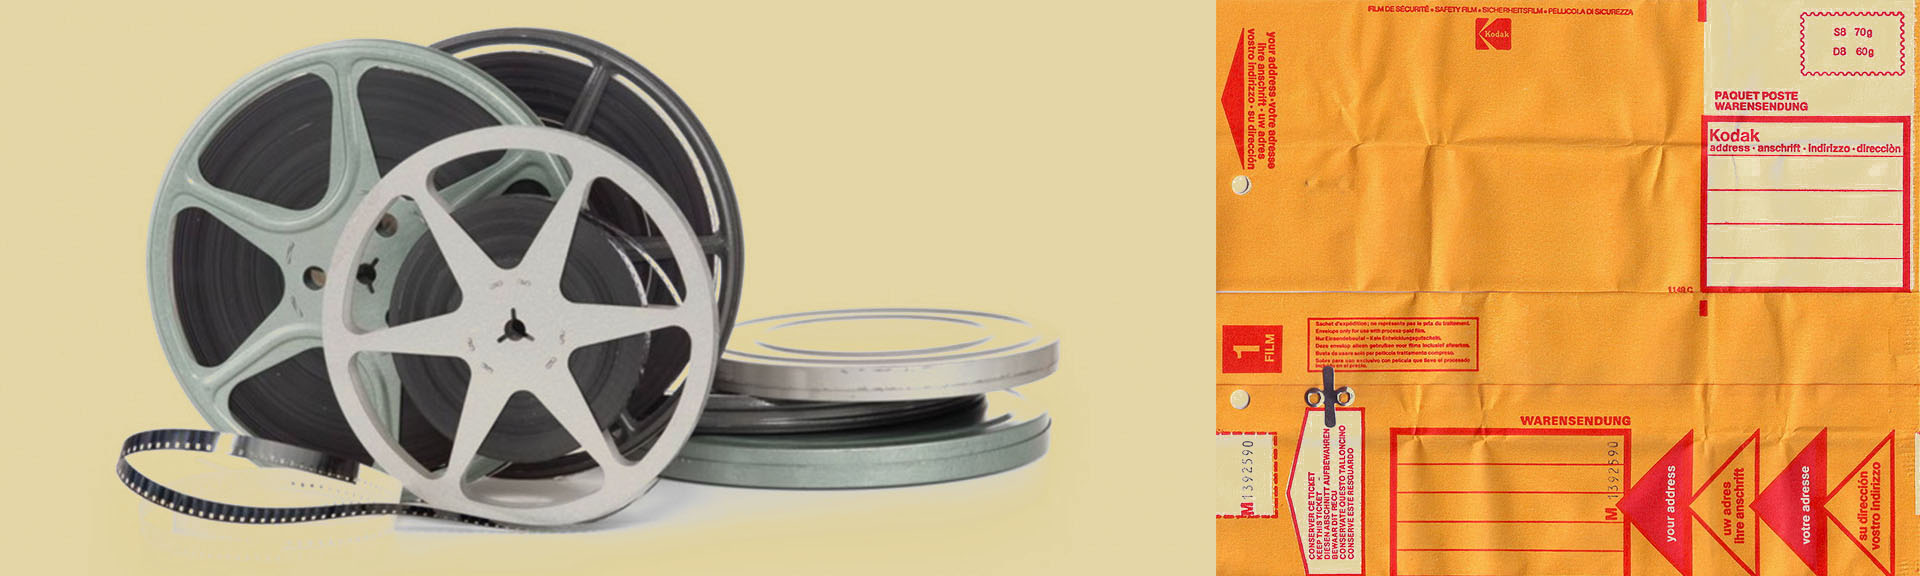 transfert de bobines de films Super 8 et 8mm argentiques